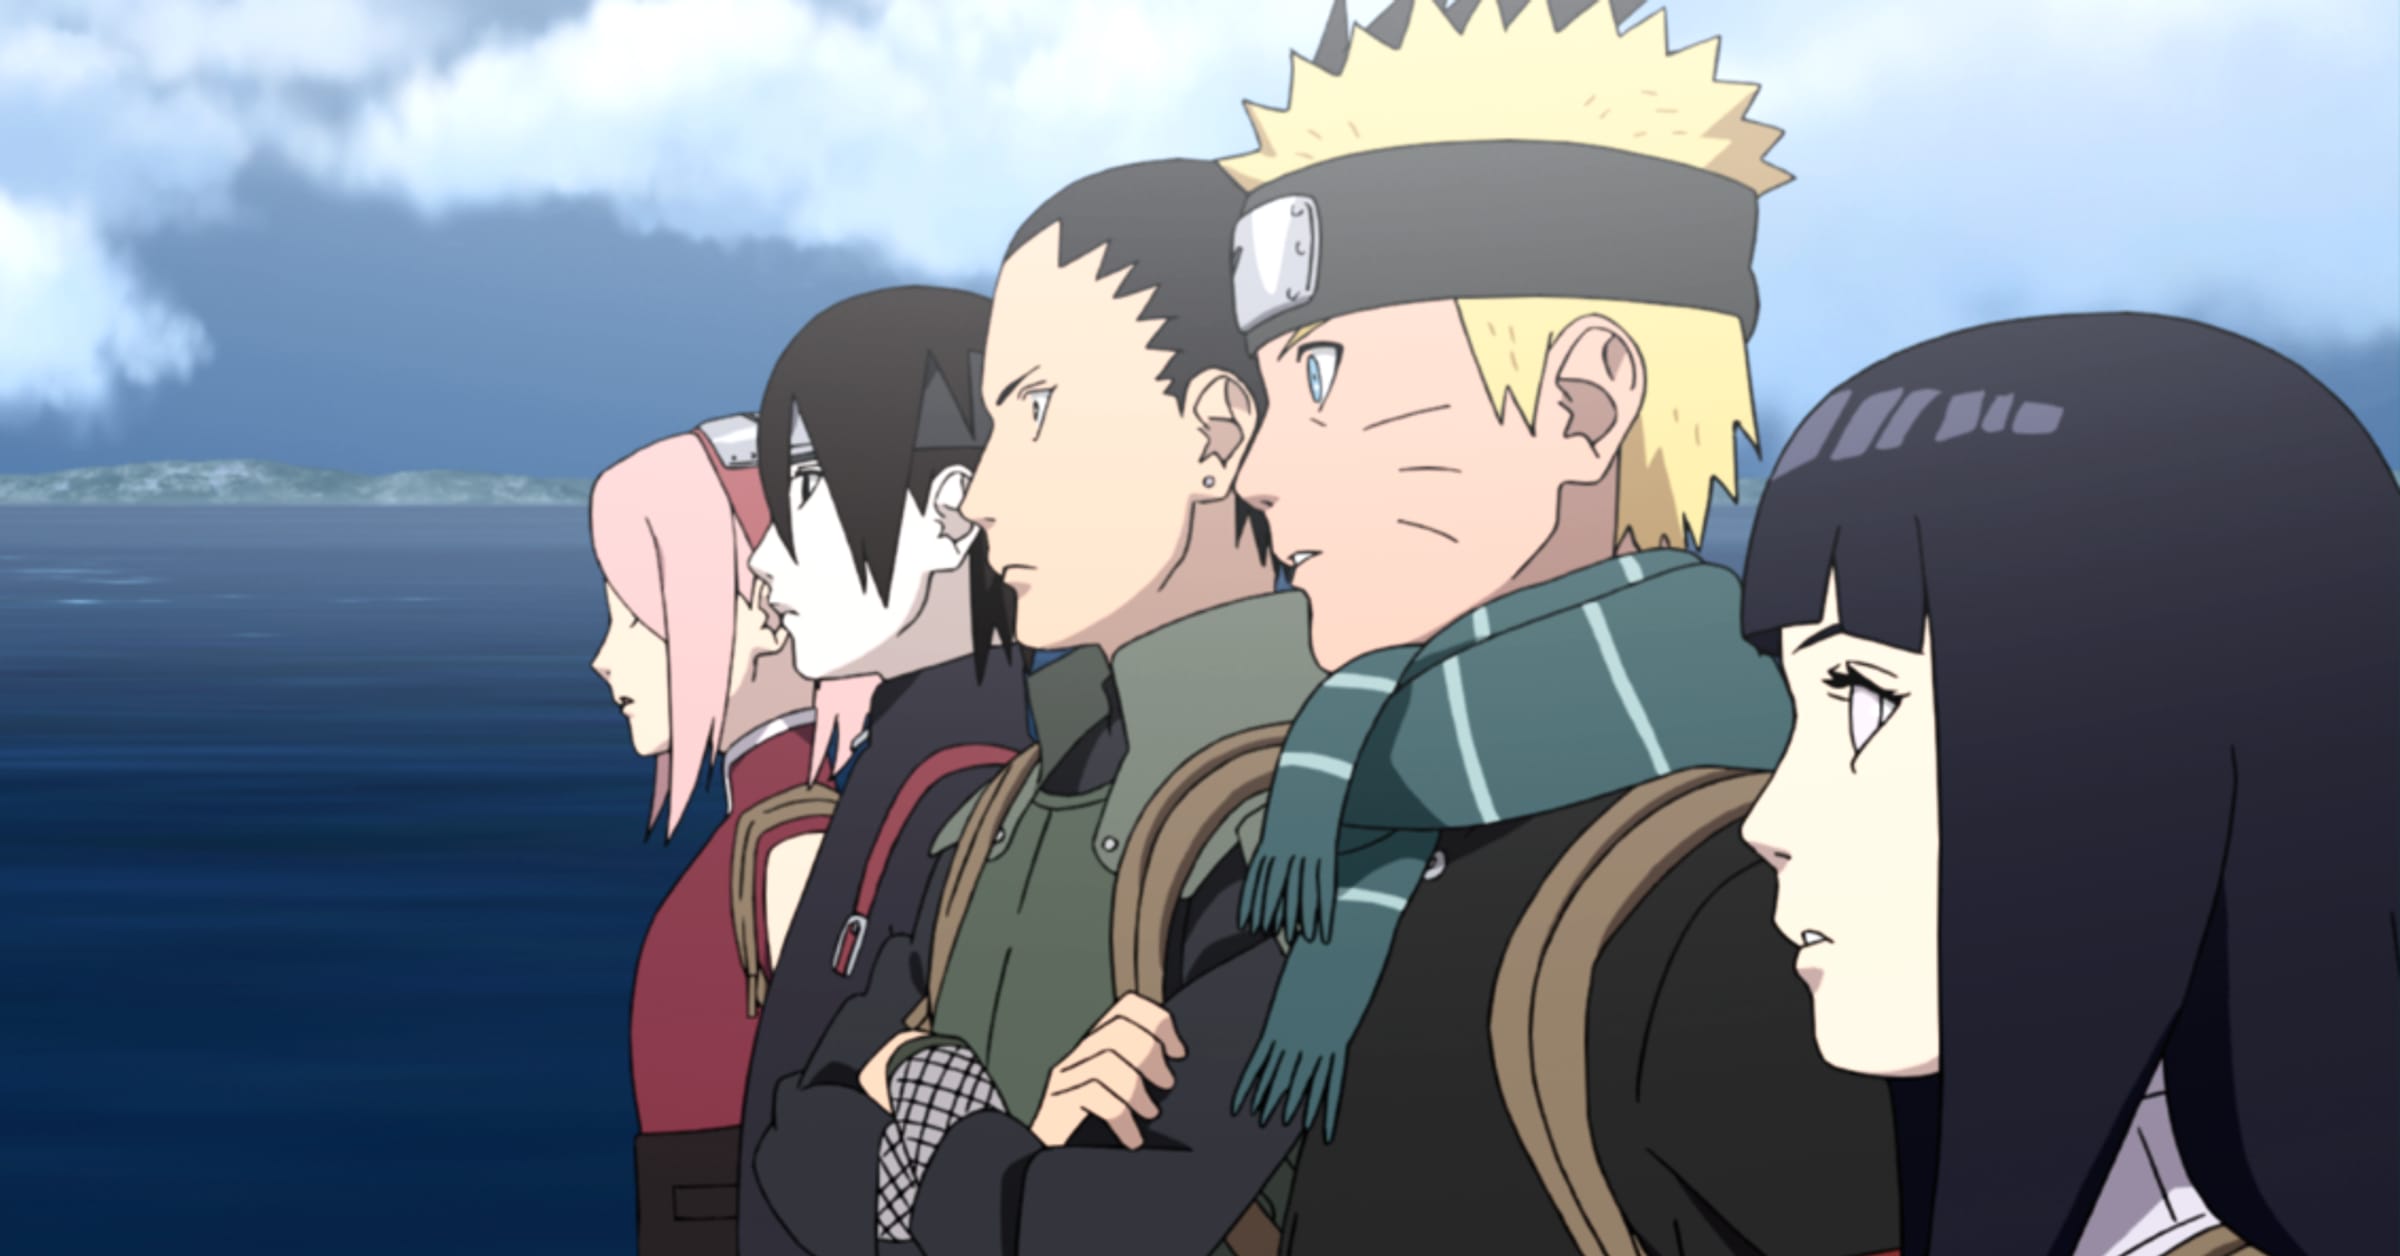 25 Best Naruto Episodes Ranked